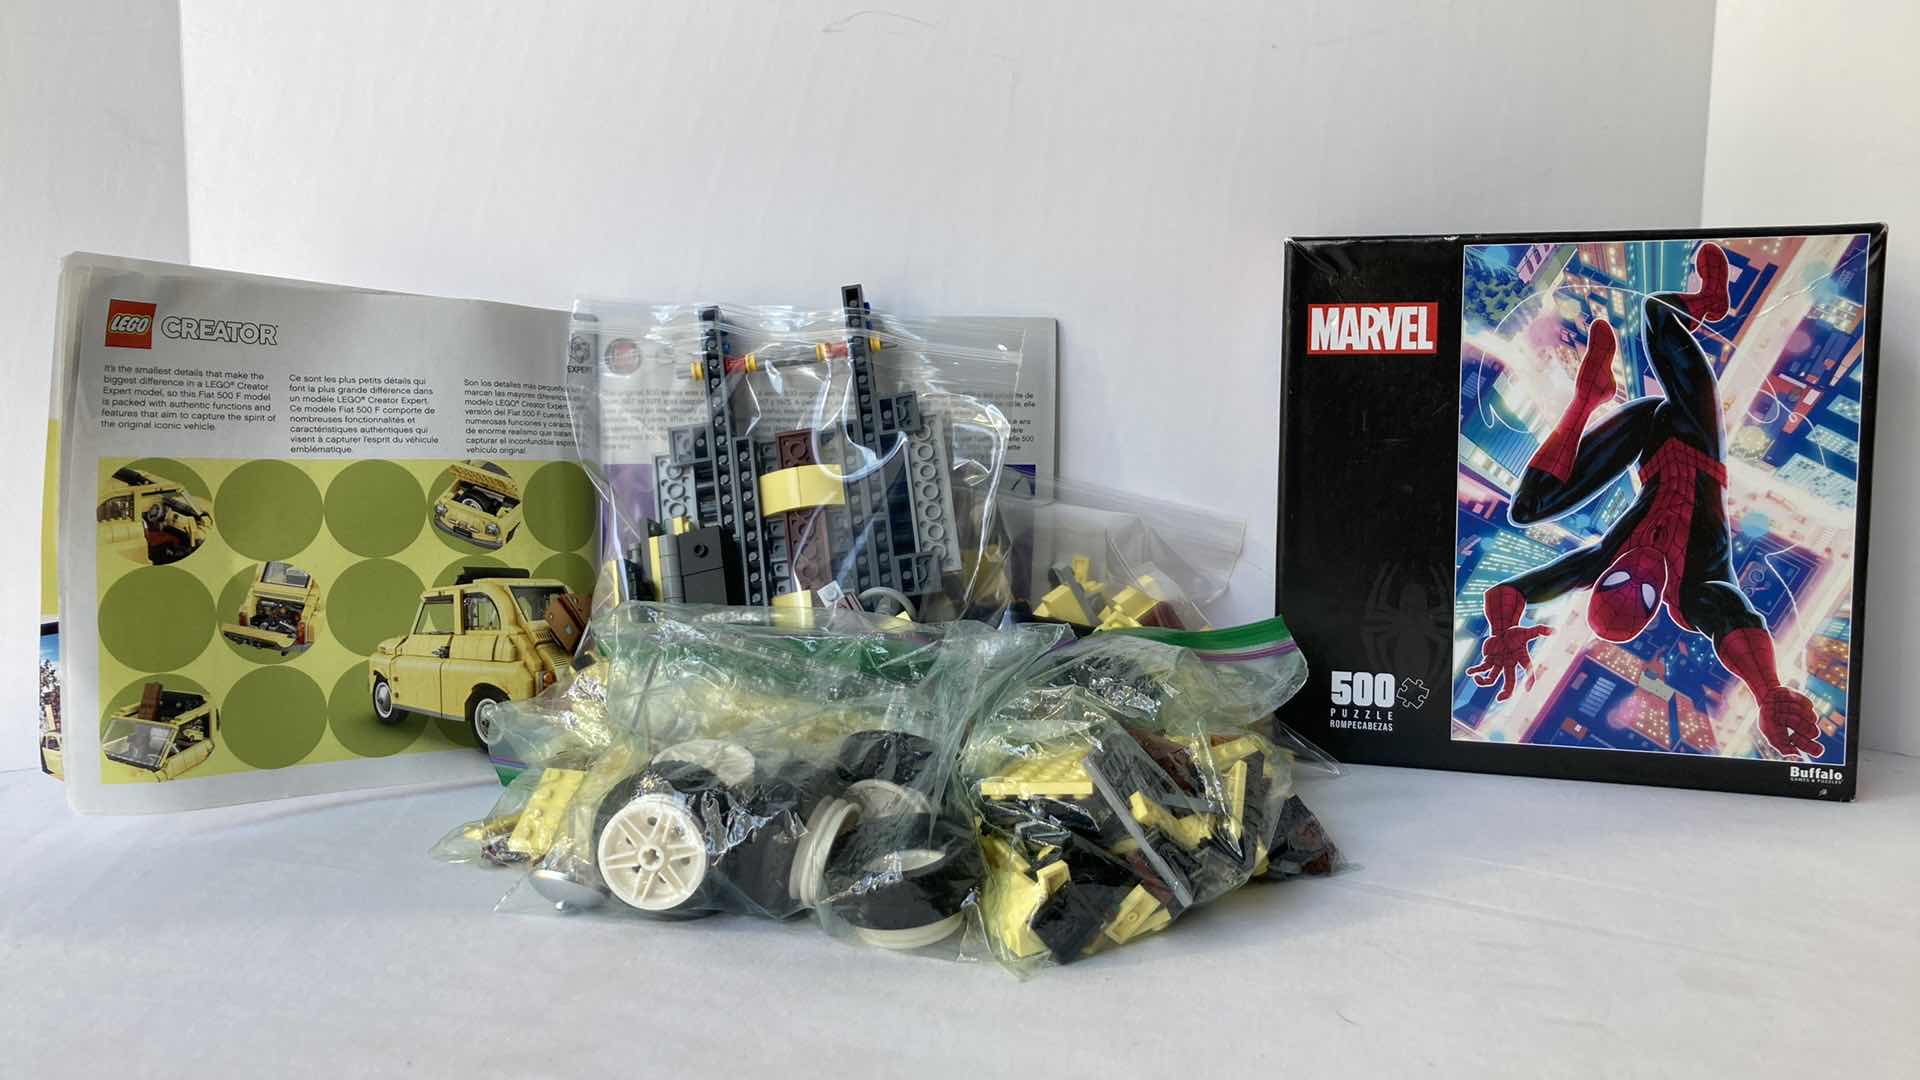 Photo 1 of LEGO CREATOR YELLOW FIAT 500 F MODEL & MARVEL SPIDER-MAN 500PC PUZZLE